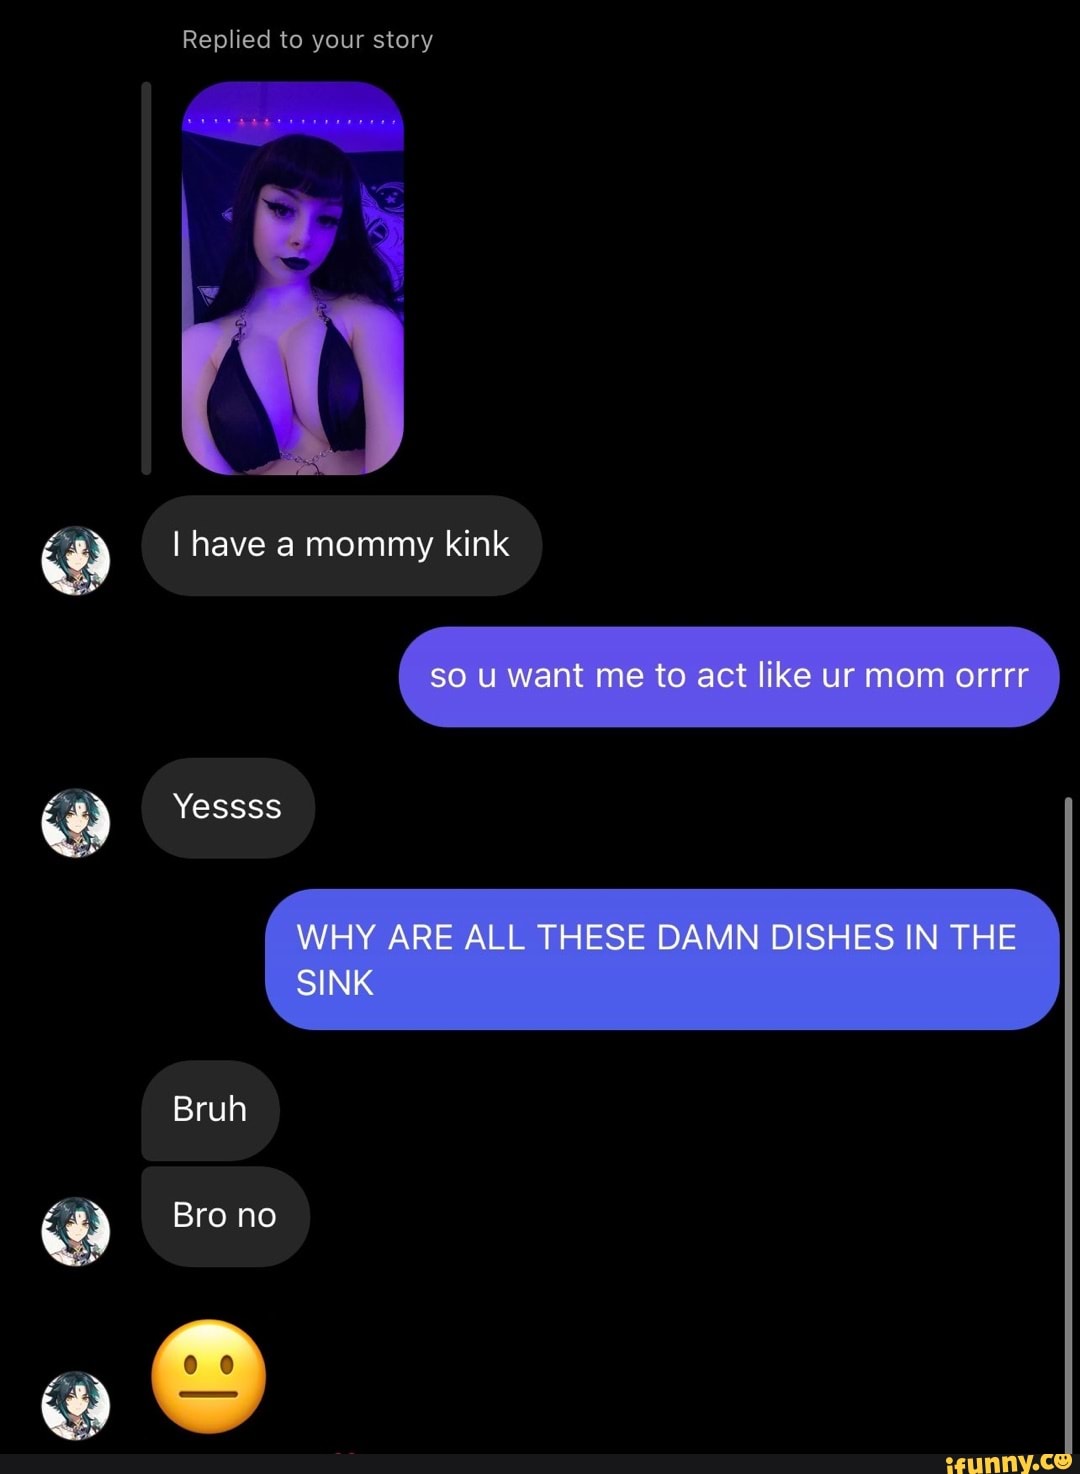 Mommy kink videos